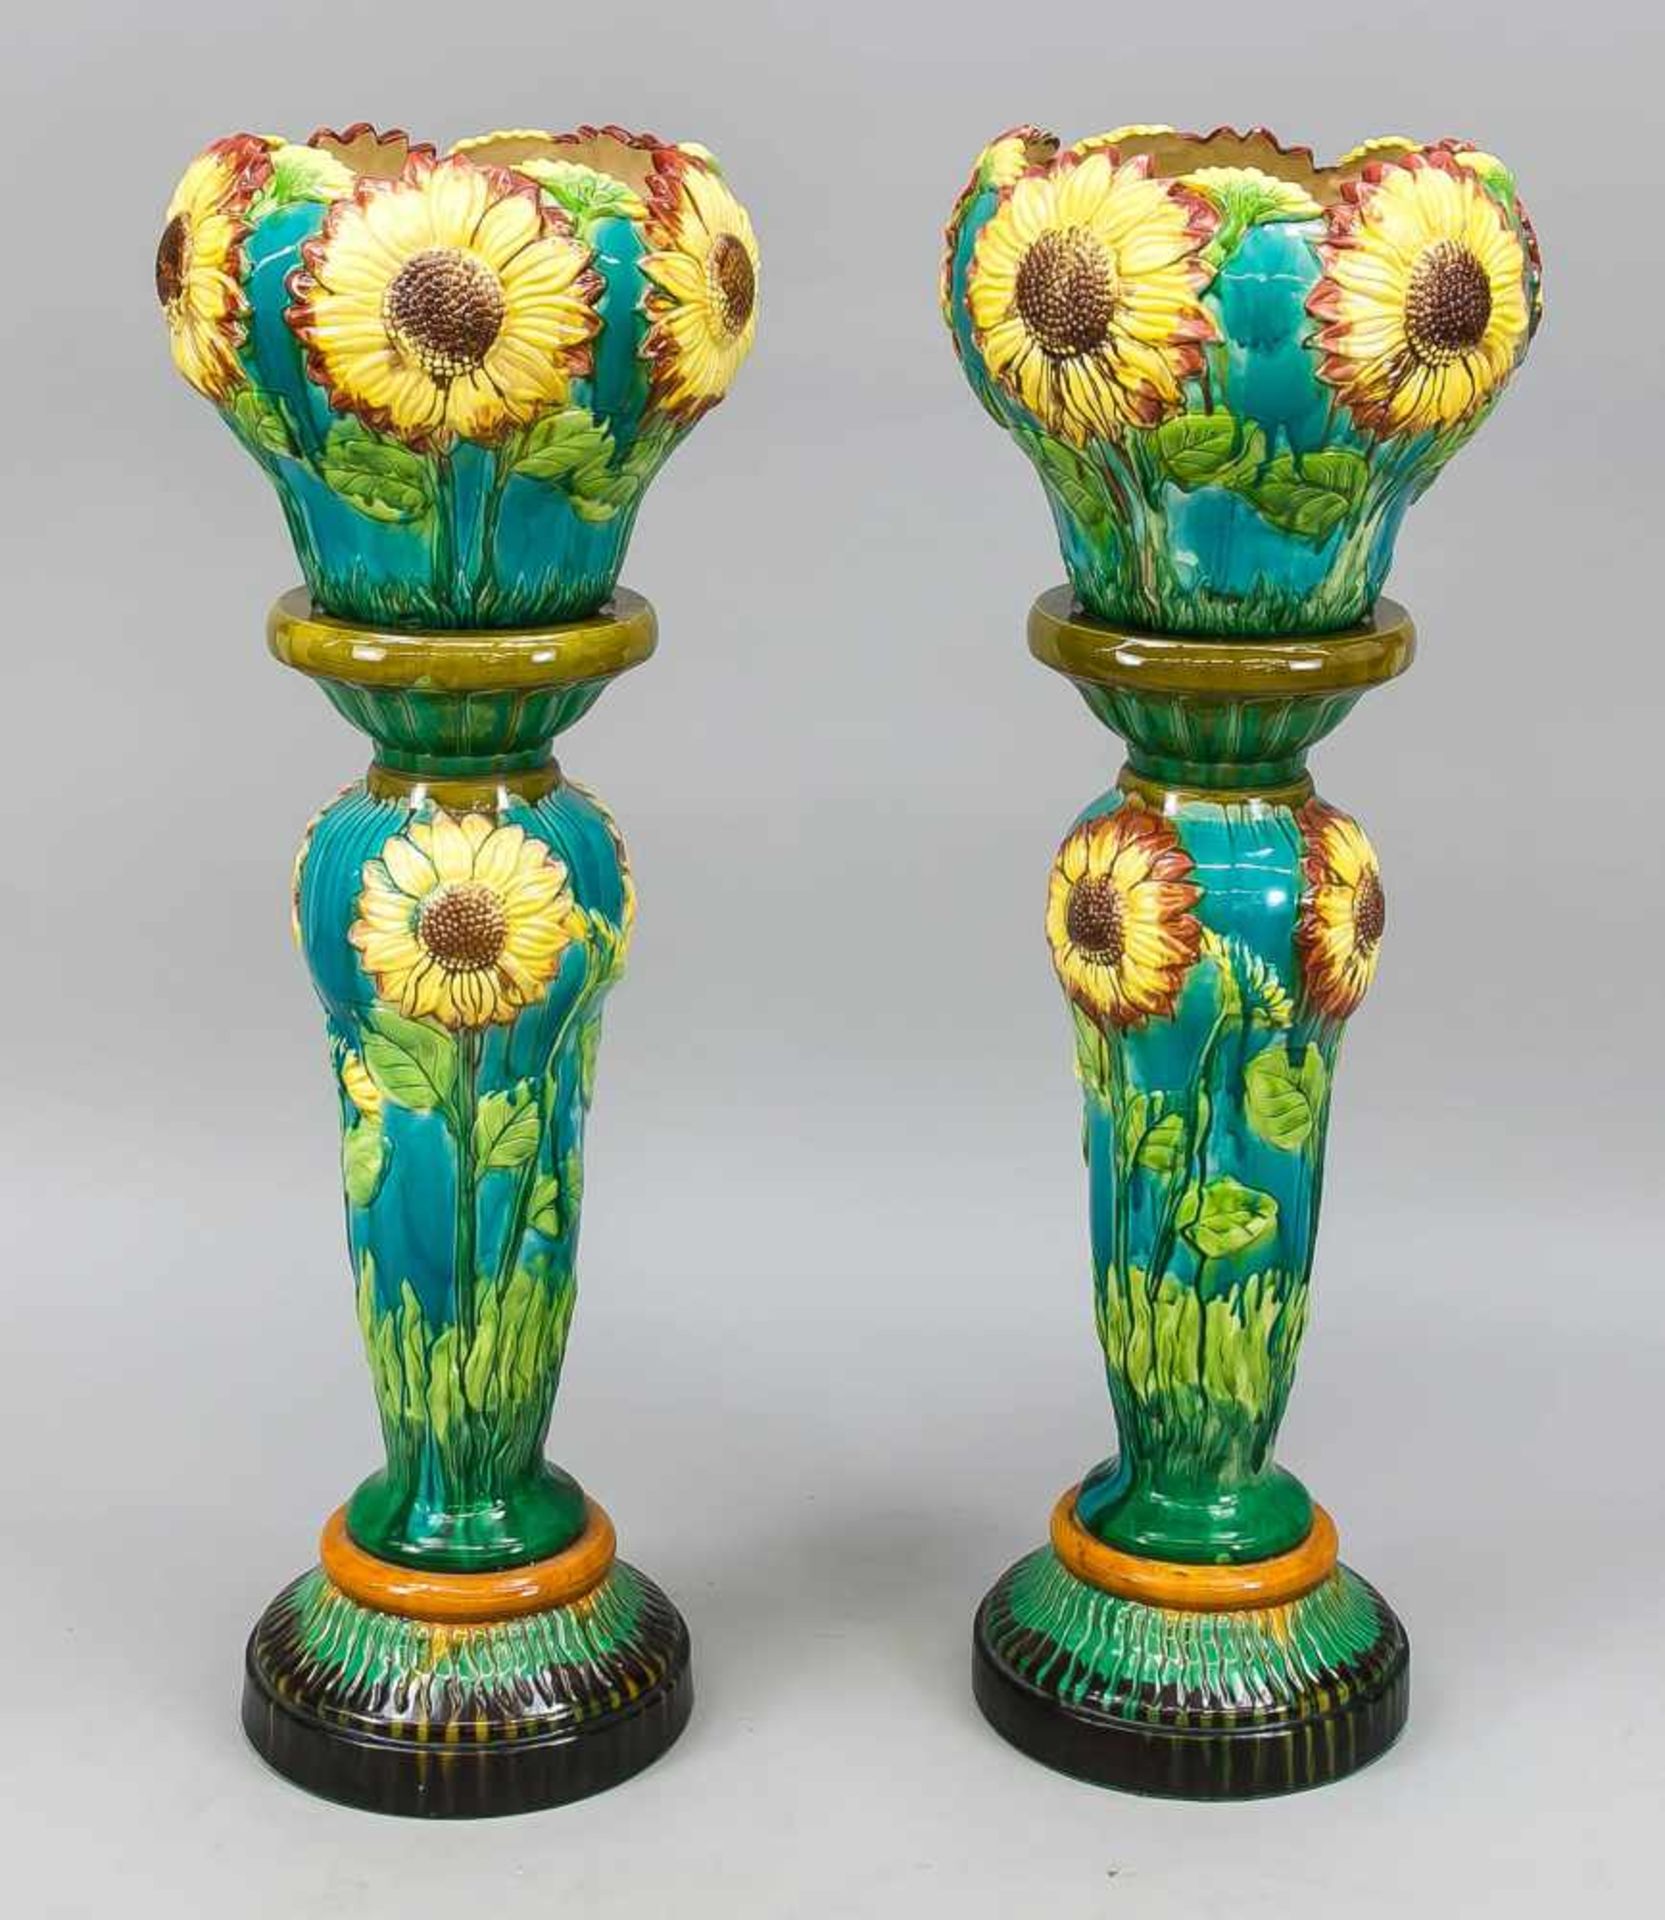 A pair of flower columns with cachepots, 20th century, ceramics, polychrome glaze,